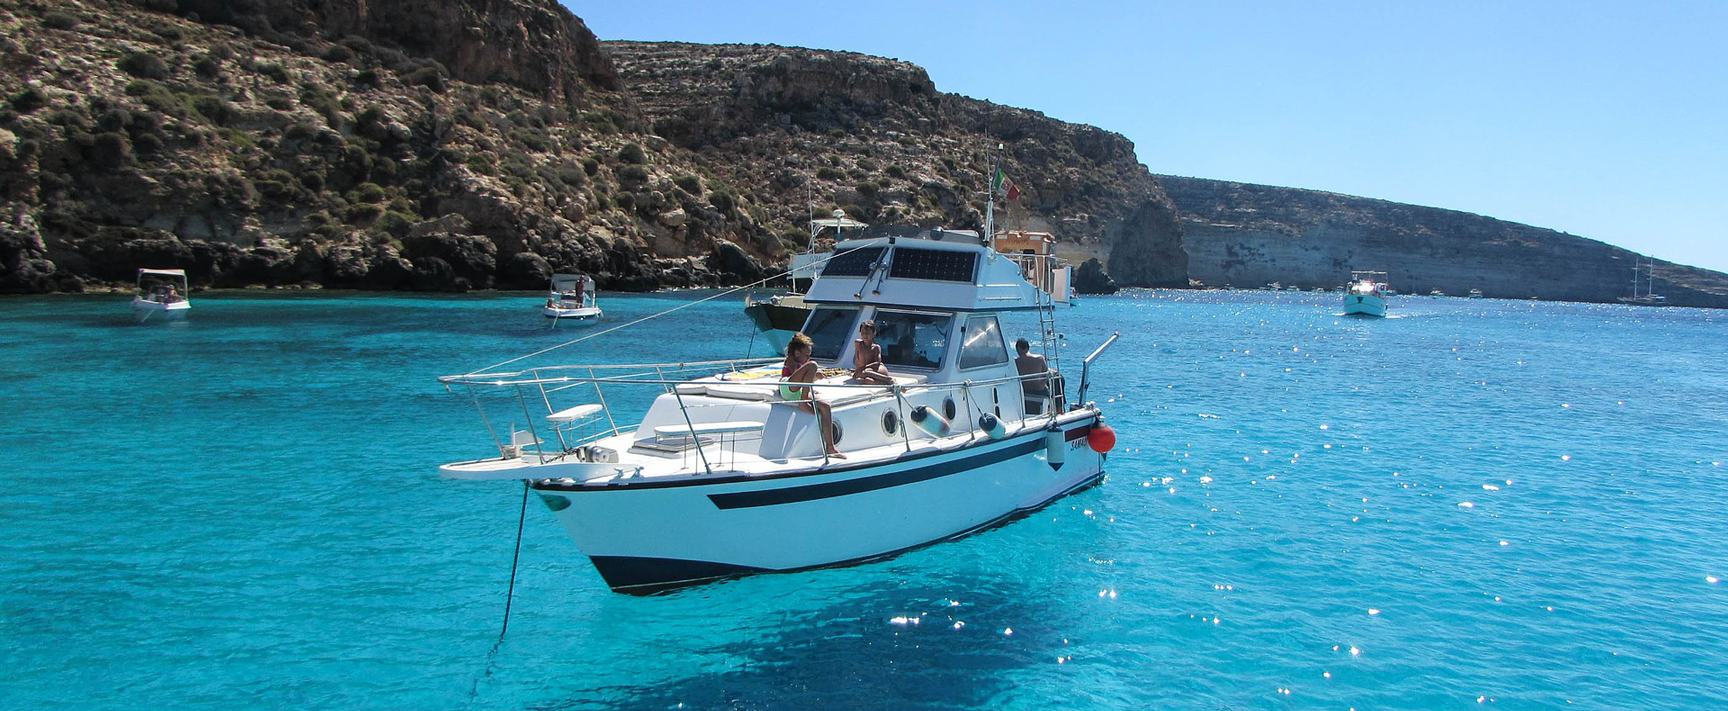 Vakantie in Italië: Lampedusa